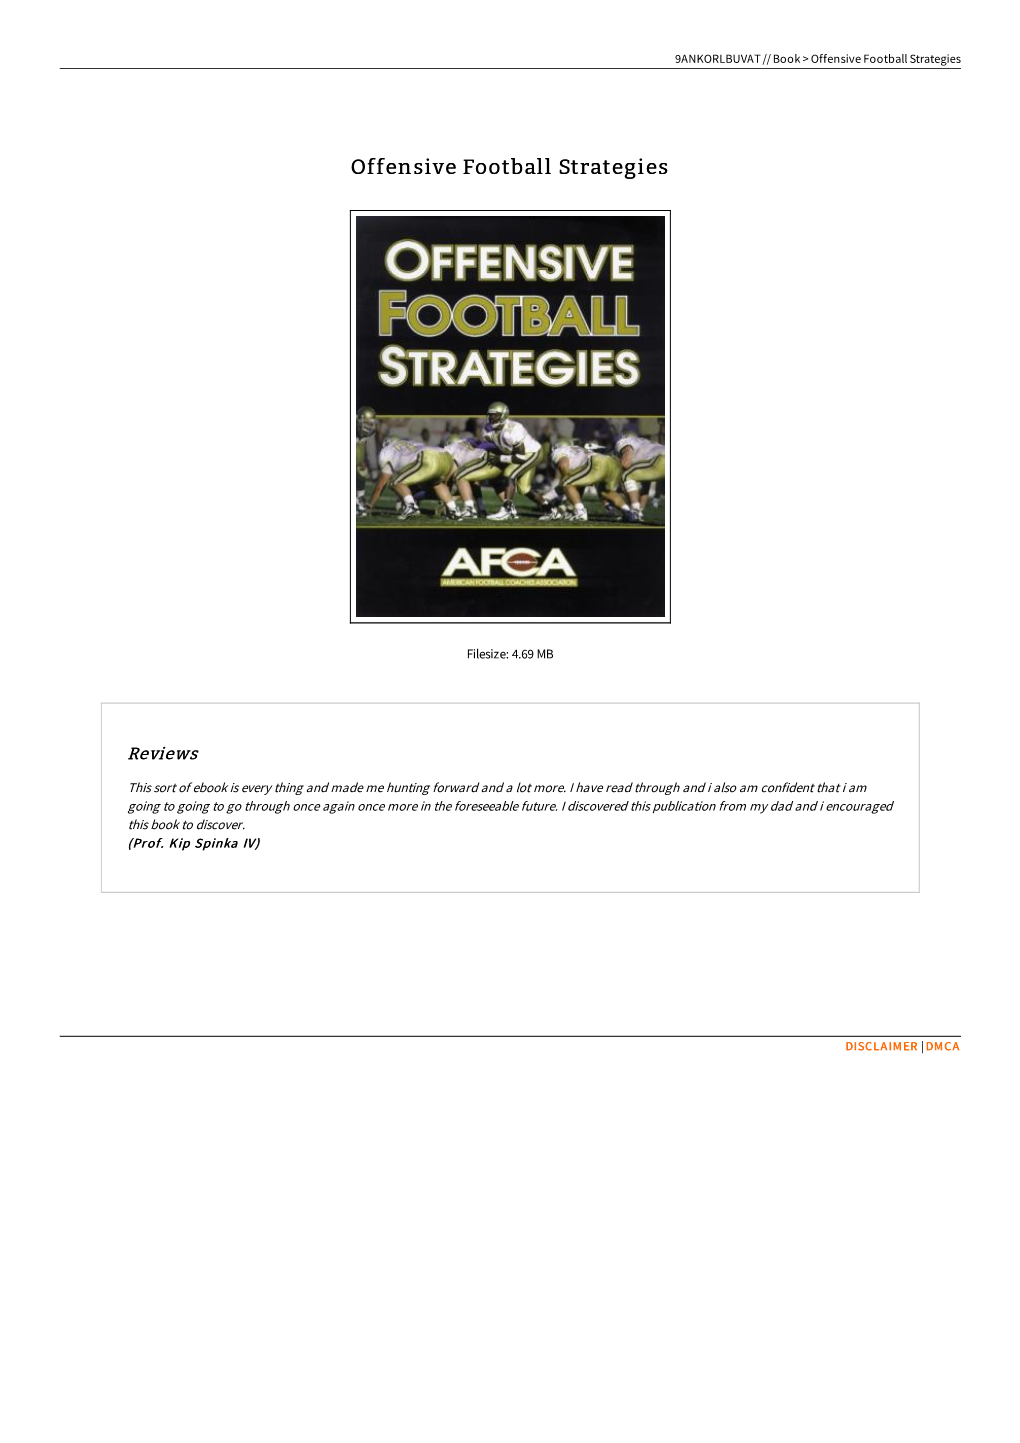 Read PDF &gt; Offensive Football Strategies